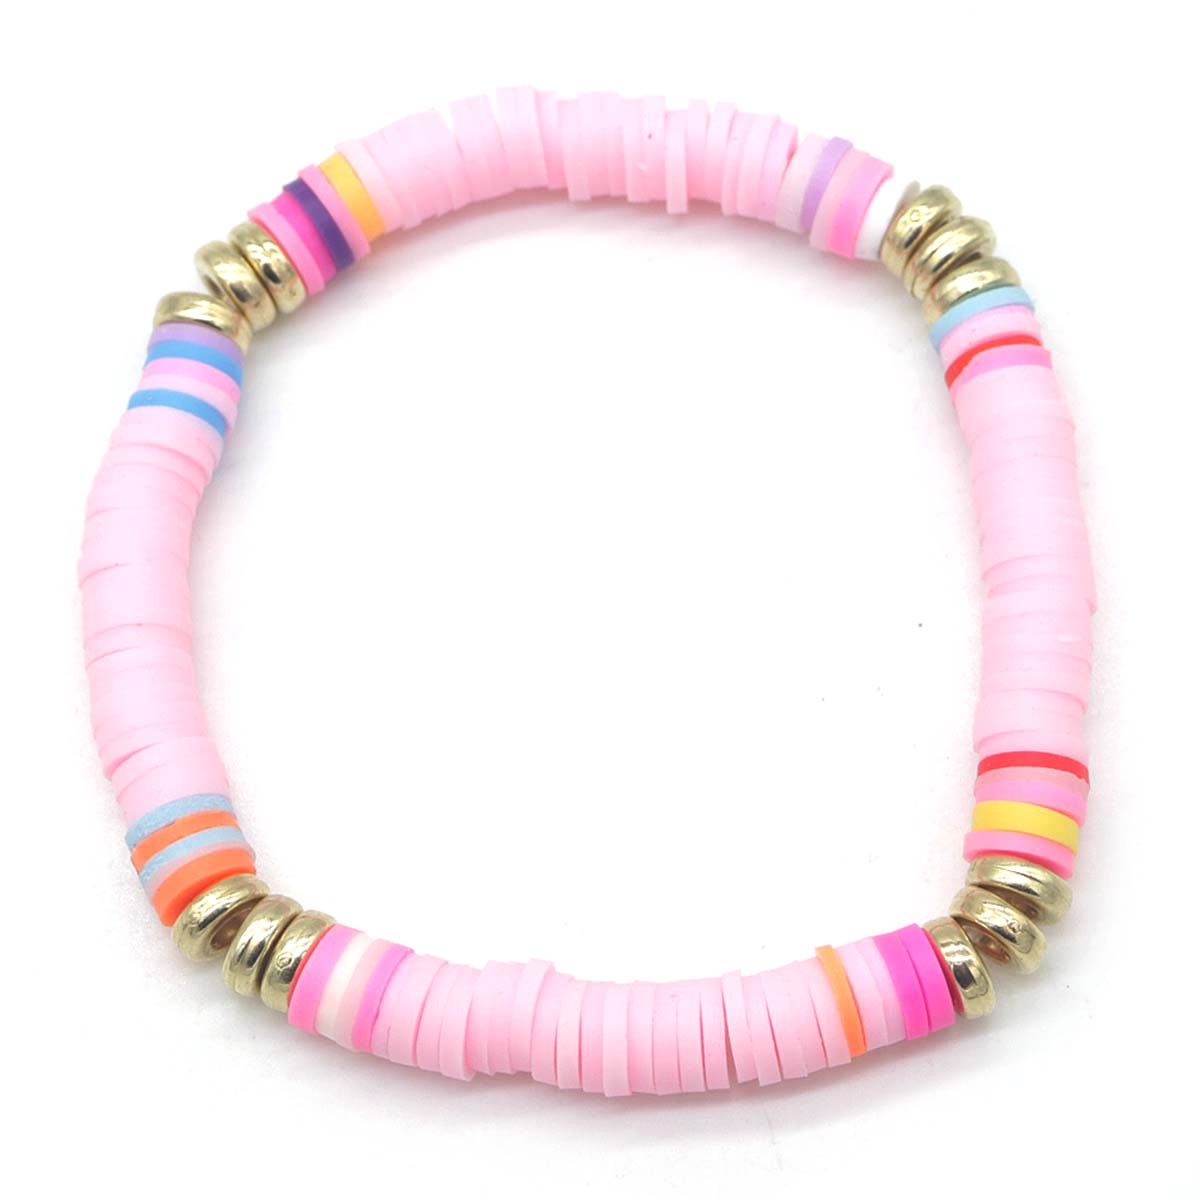 B-F24.1 B2375-060-4 Bracelet for Kids Pink